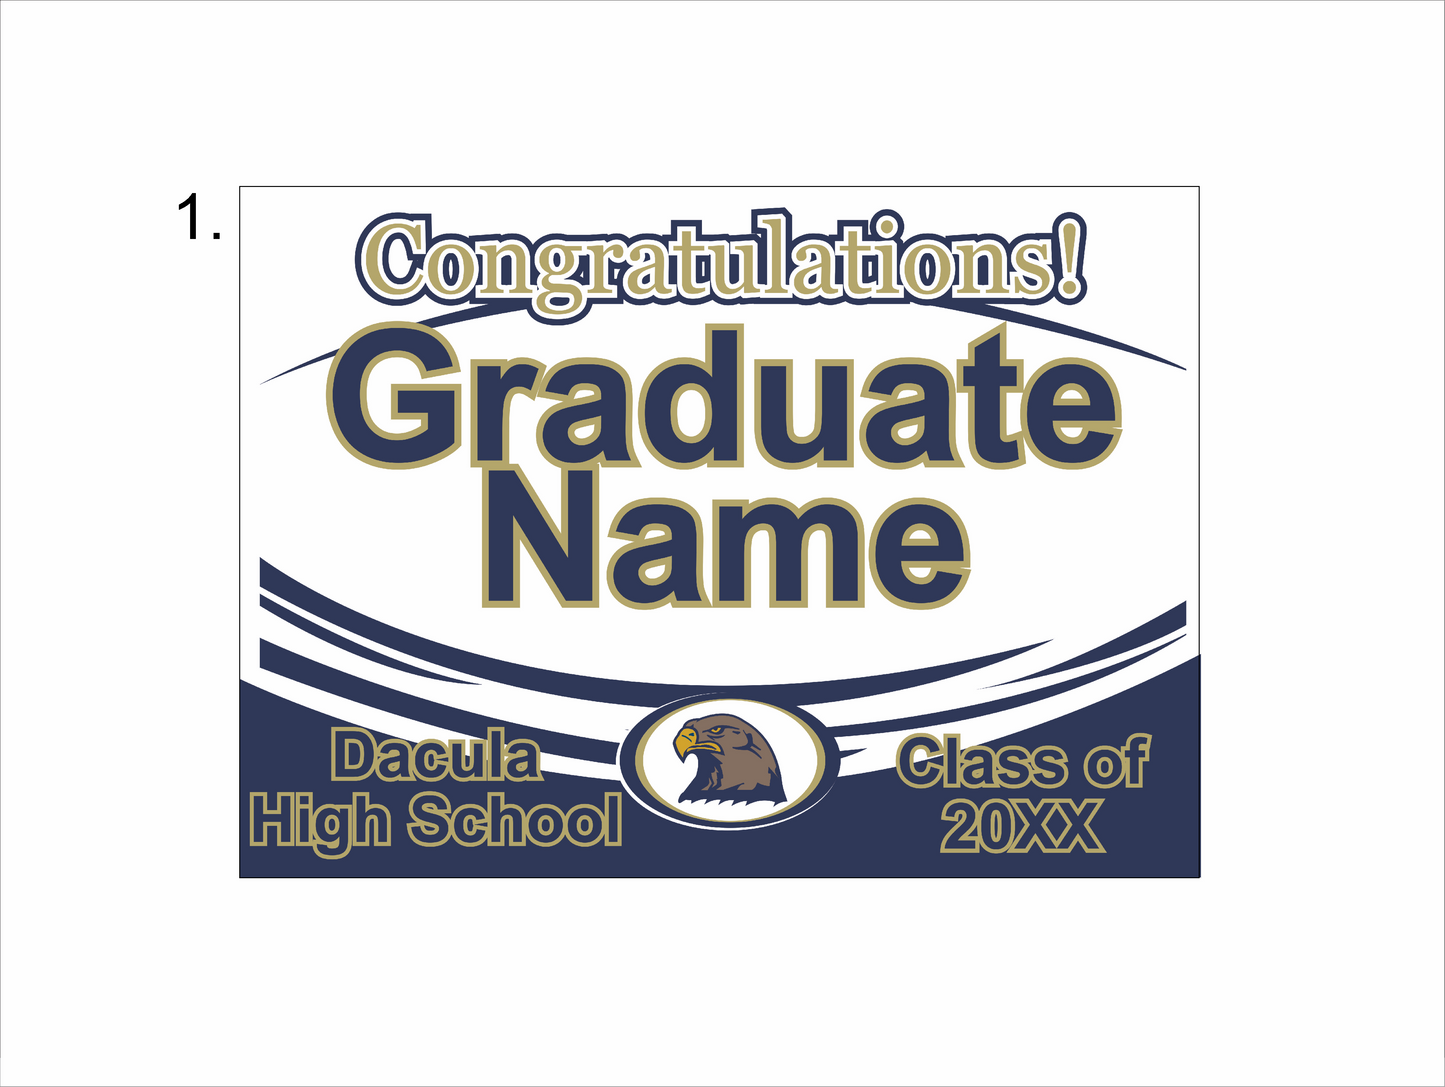 Custom Graduate Banner